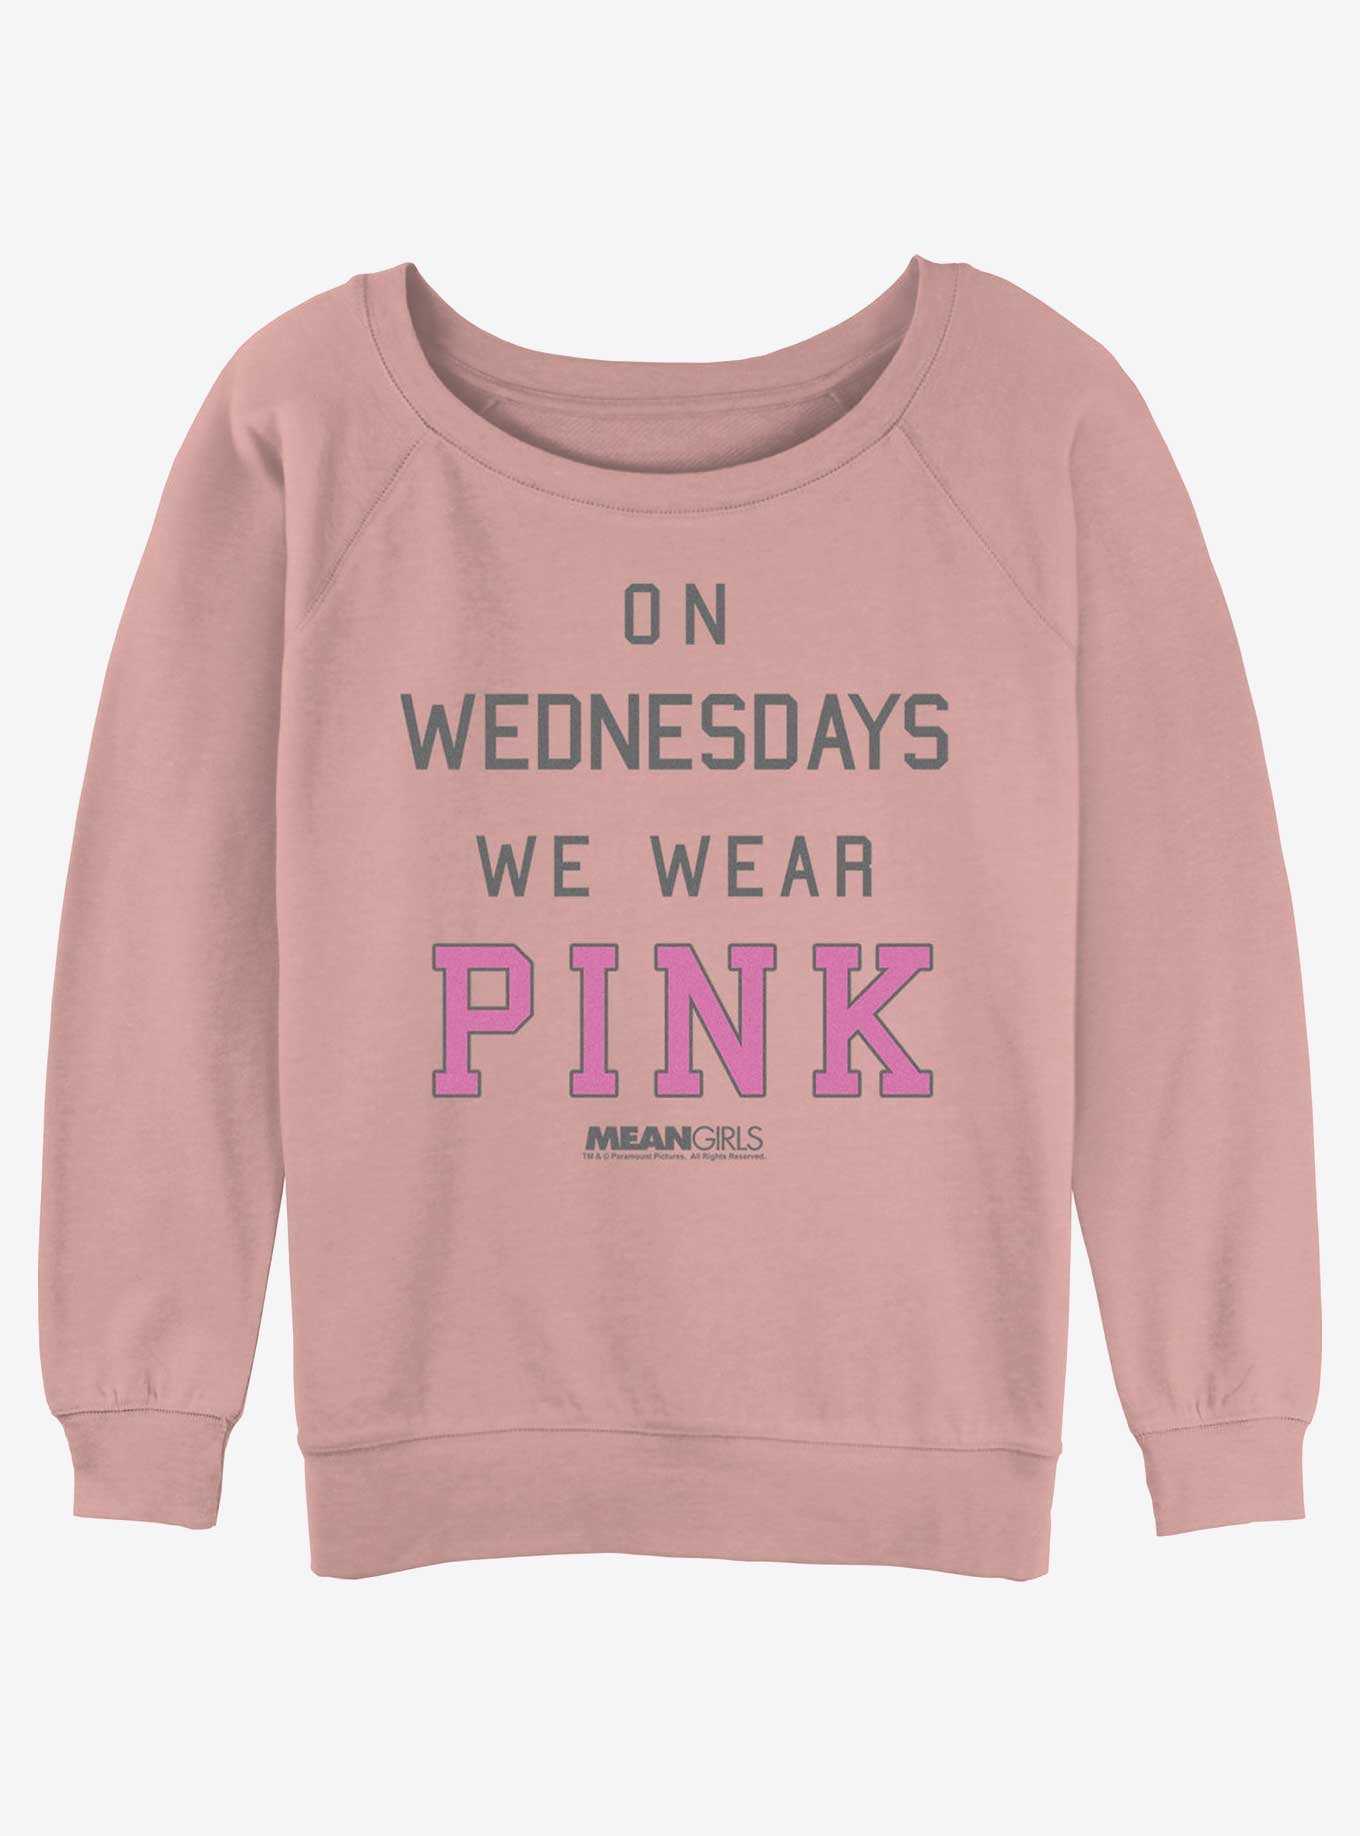 Mean Girls Wednesdays We Wear Pink Girls Slouchy Sweatshirt, , hi-res